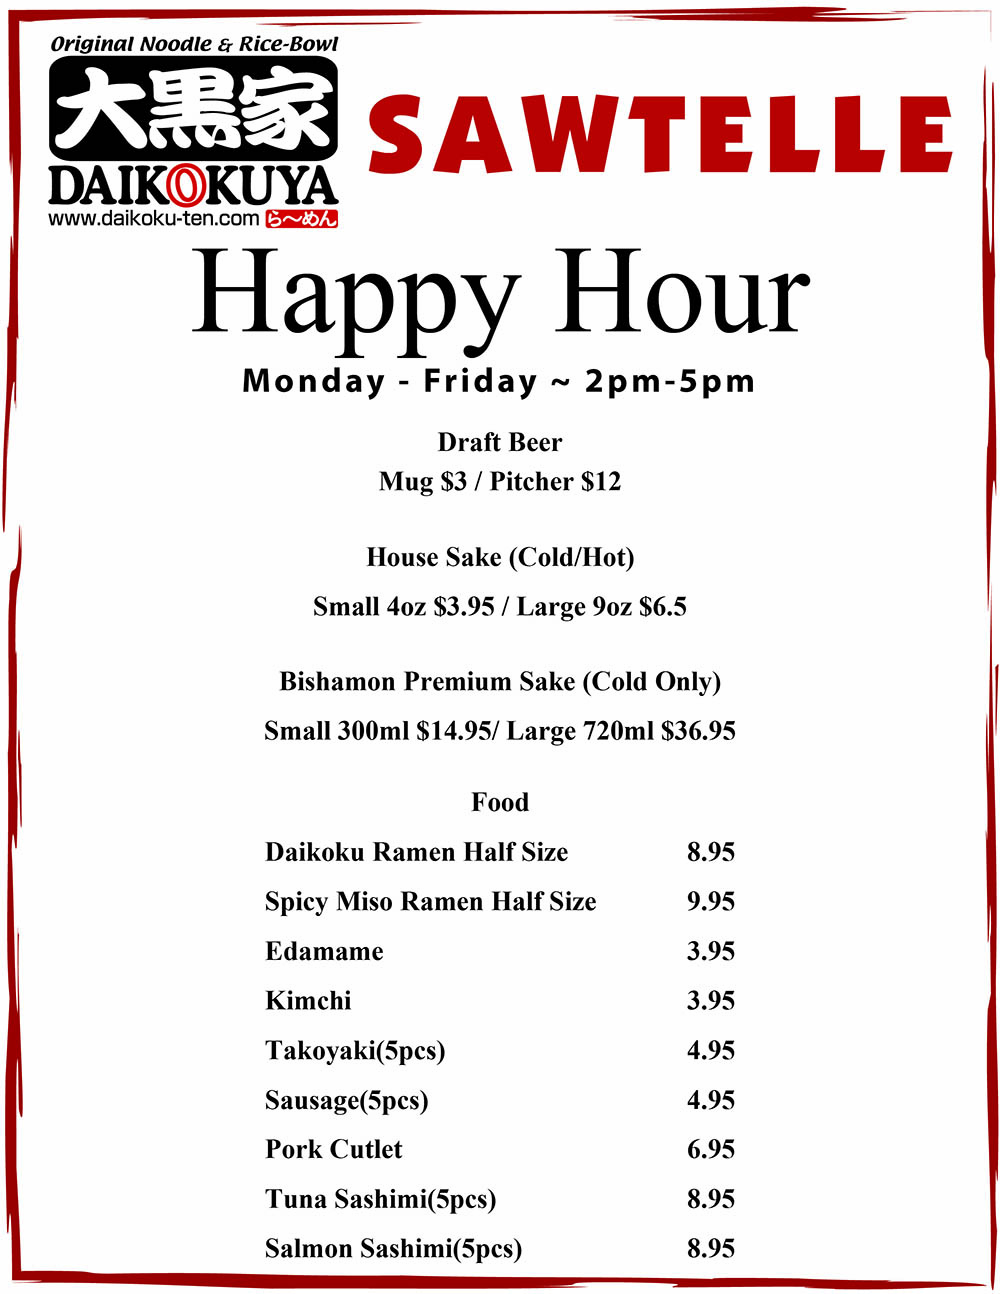 Sawtelle Daikokuya Happy Hour – Monday to Friday - 2pm to 5pm